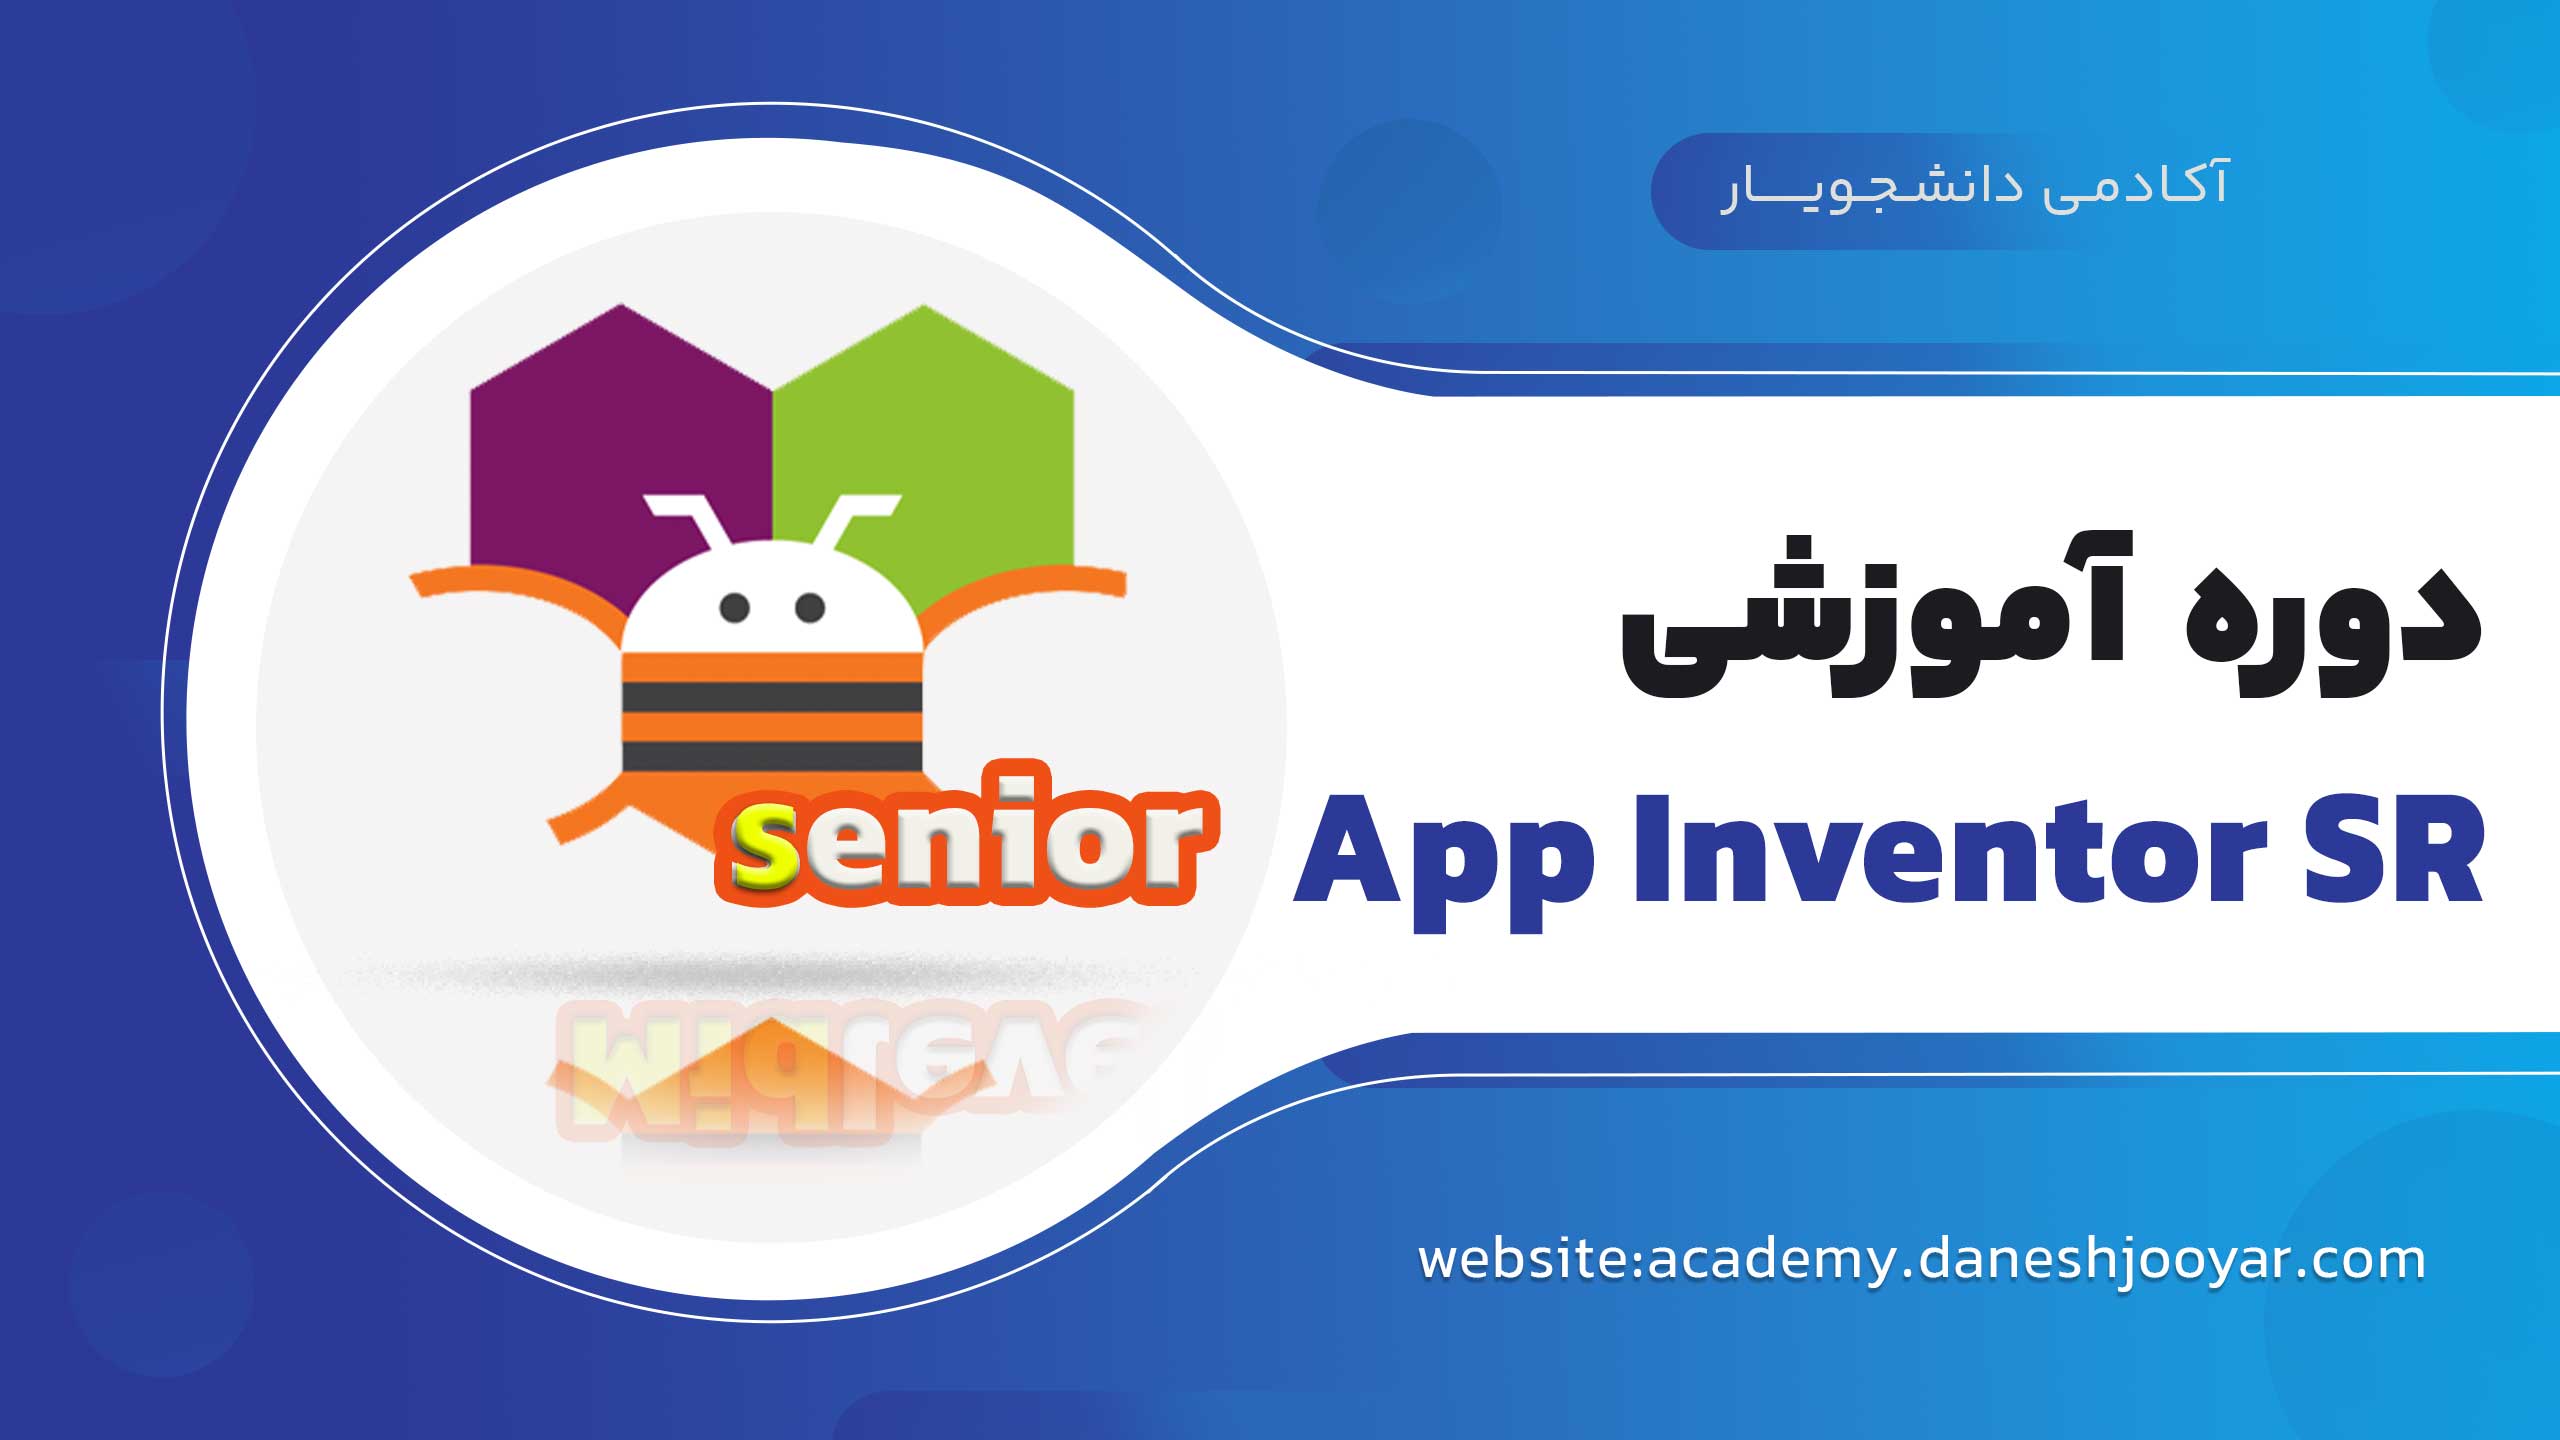 App inventor Senior